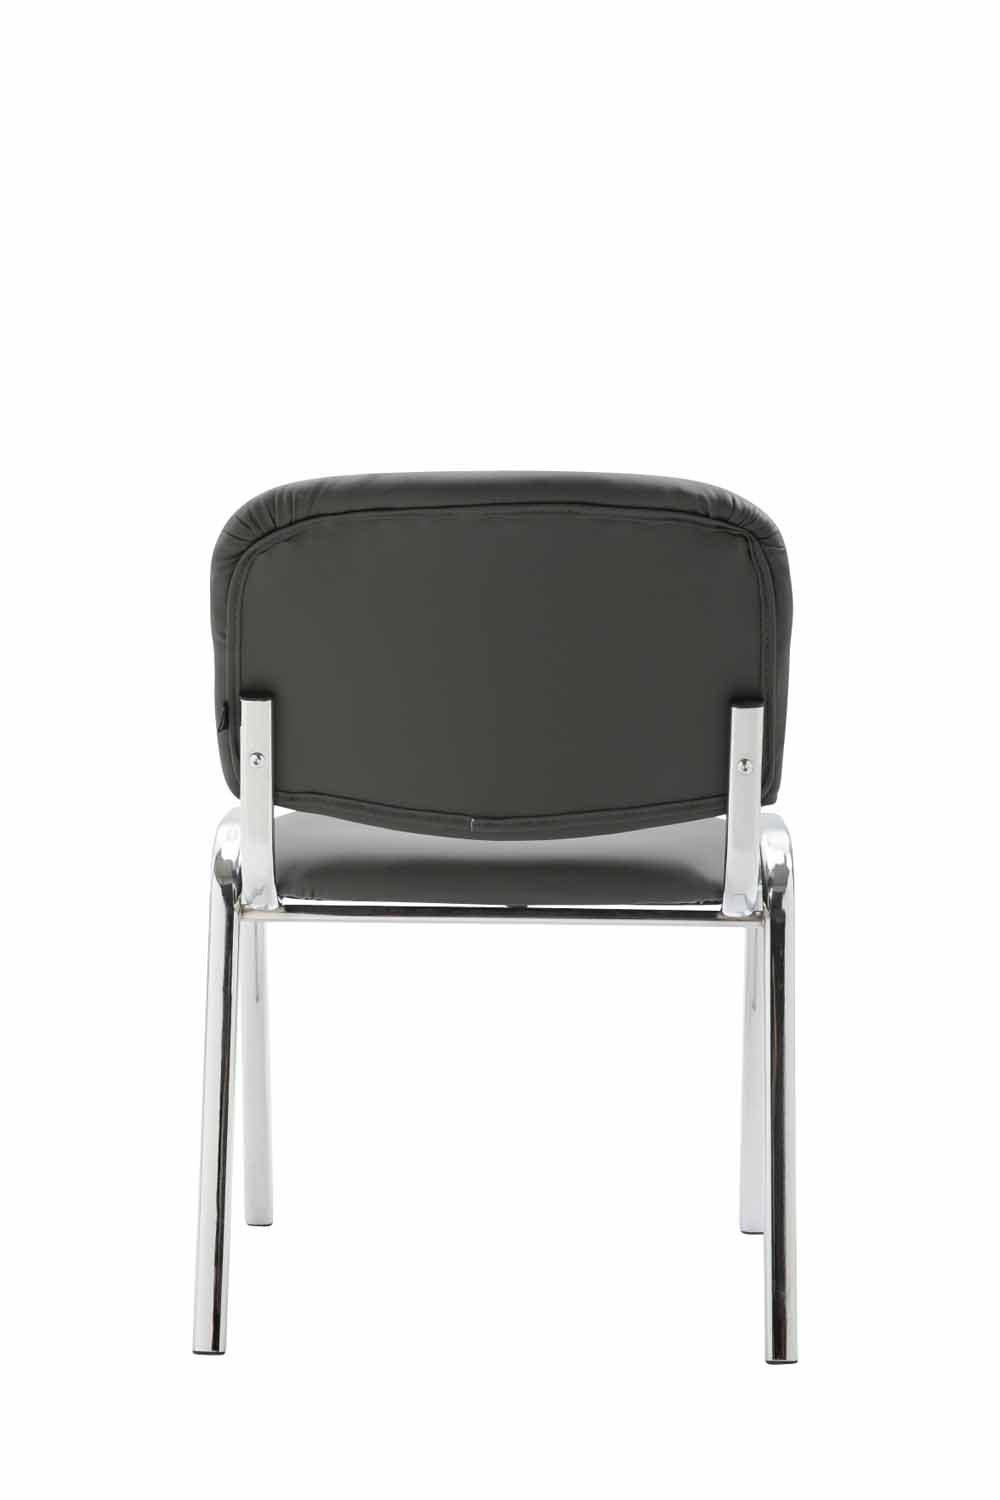 - hochwertiger - Sitzfläche: grau Warteraumstuhl Polsterung Keen chrom Kunstleder TPFLiving Metall Konferenzstuhl Besucherstuhl (Besprechungsstuhl - mit - Gestell: Messestuhl),